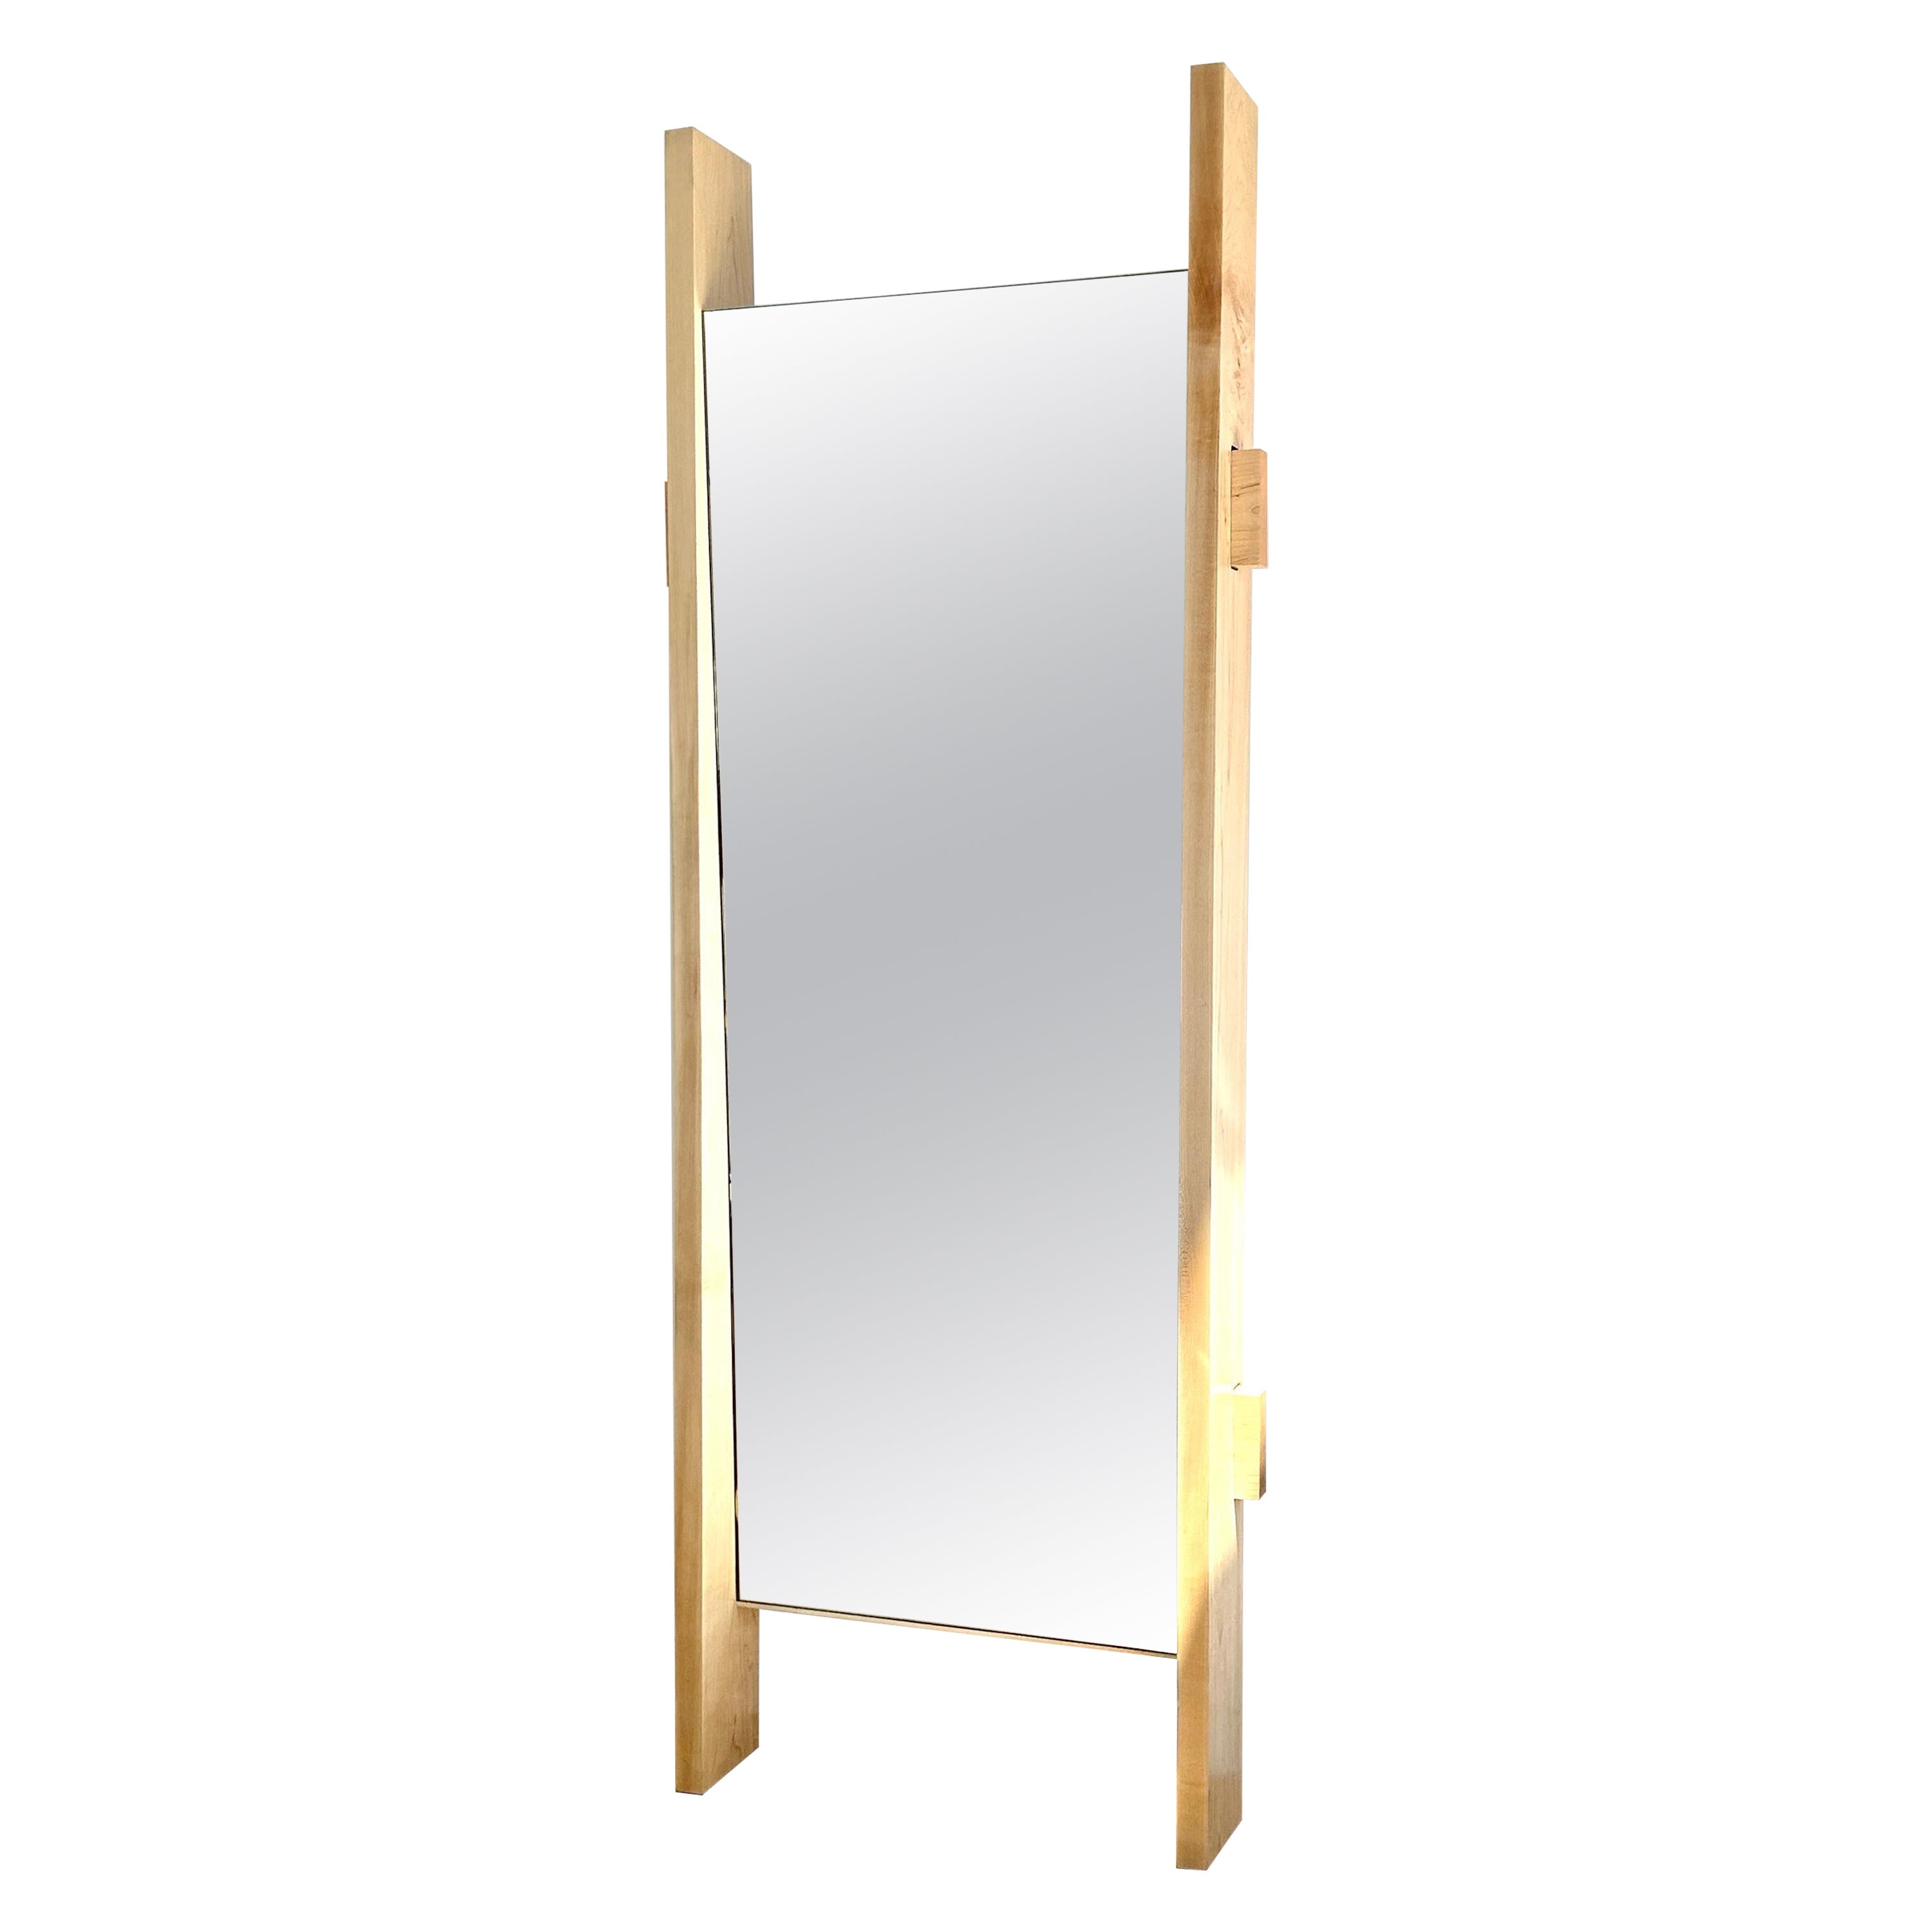 Miroir de foyer minimaliste du 21e siècle